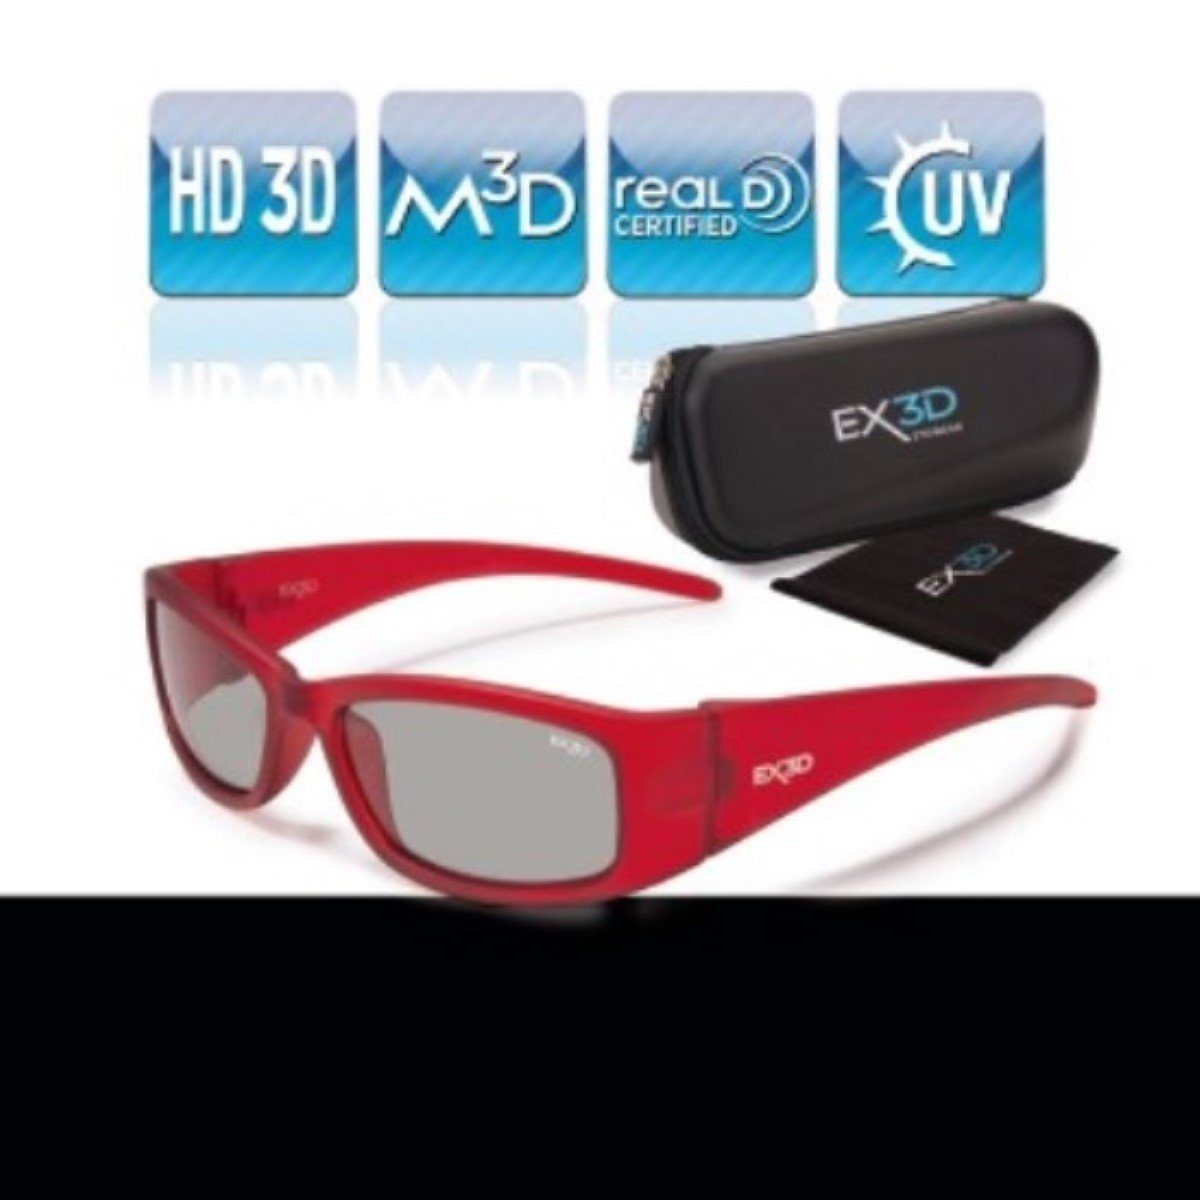 Rot, 3D 3D-Technik Universell Brille Polarisation, Passiv Passiv 3D-Brille Kids Hama Beamer Kinder Kino Polfilterbrille etc. für 3D-TV